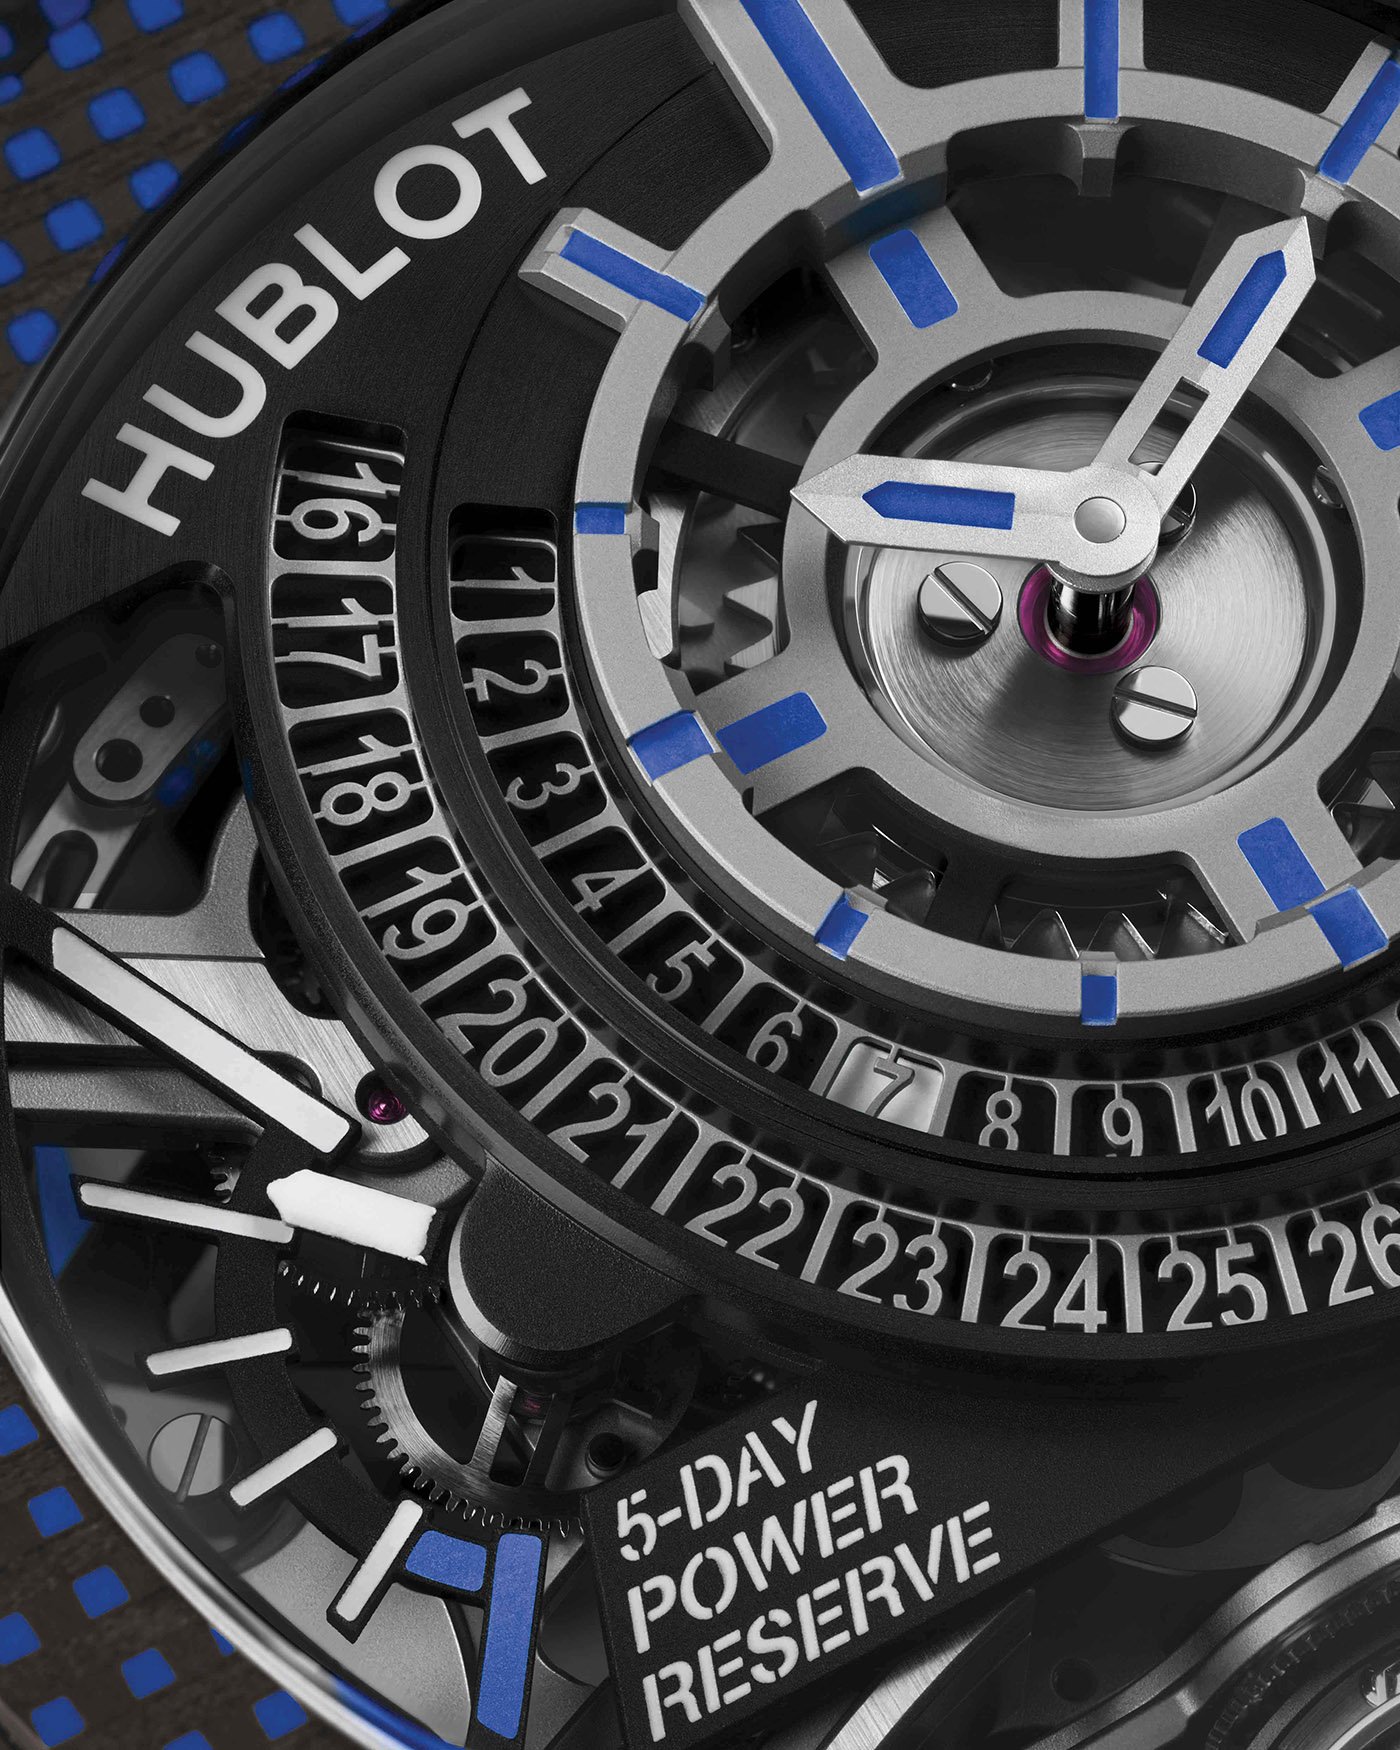 Hublot представляет ограниченную серию часов MP-09 Tourbillon Bi-Axis 5 Days Power Reserve 3D Carbon